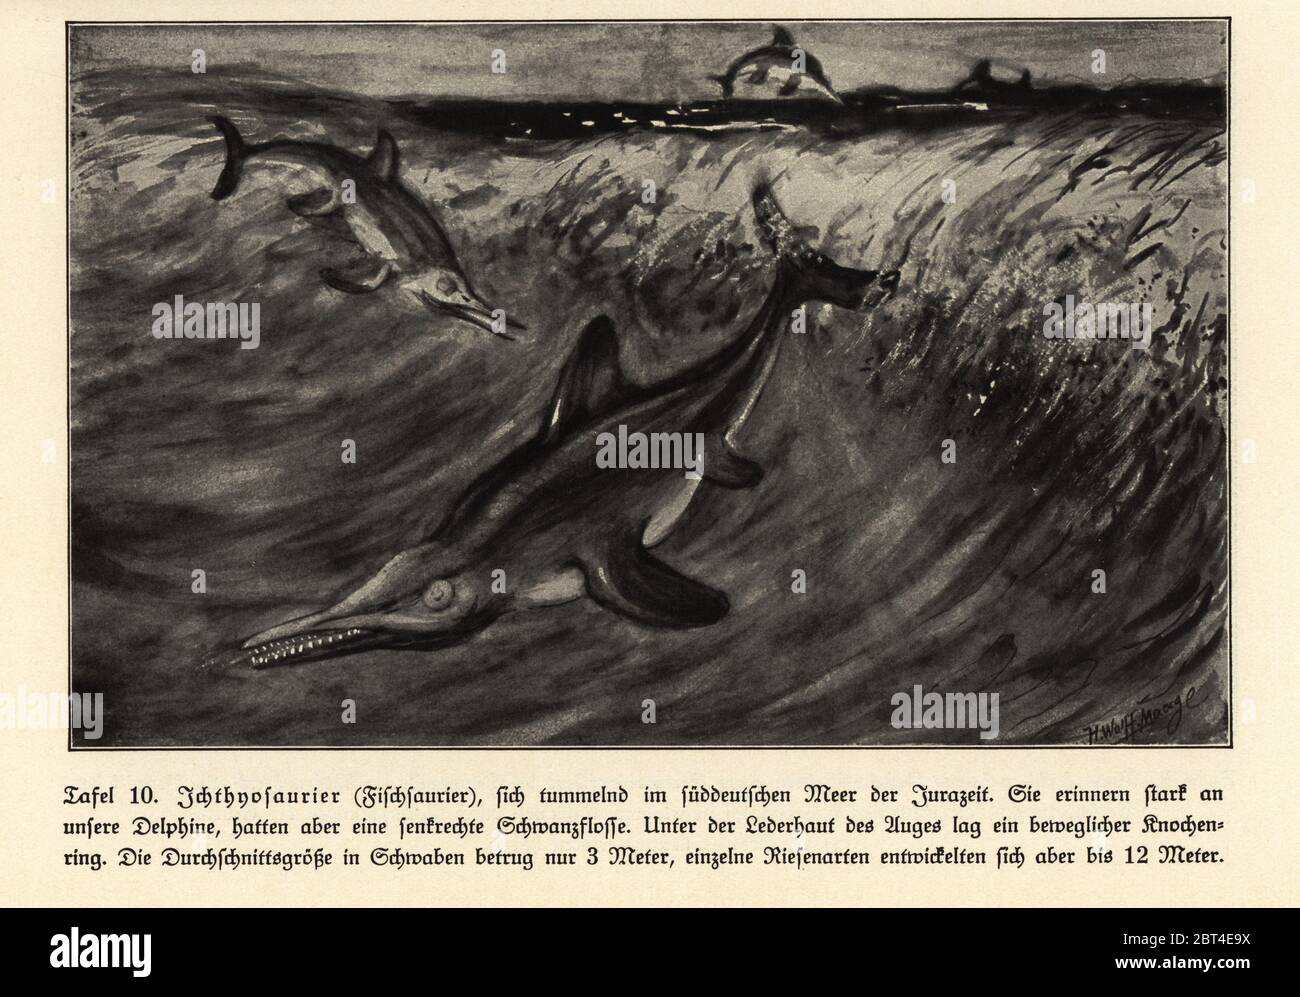 Reproduction of extinct Ichthyosaurs in the South German Sea, Jurassic era. Illustration by Hugo Wolff-Maage from Wilhelm Bolsches Das Leben der Urwelt, Prehistoric Life, Georg Dollheimer, Leipzig, 1932. Stock Photo